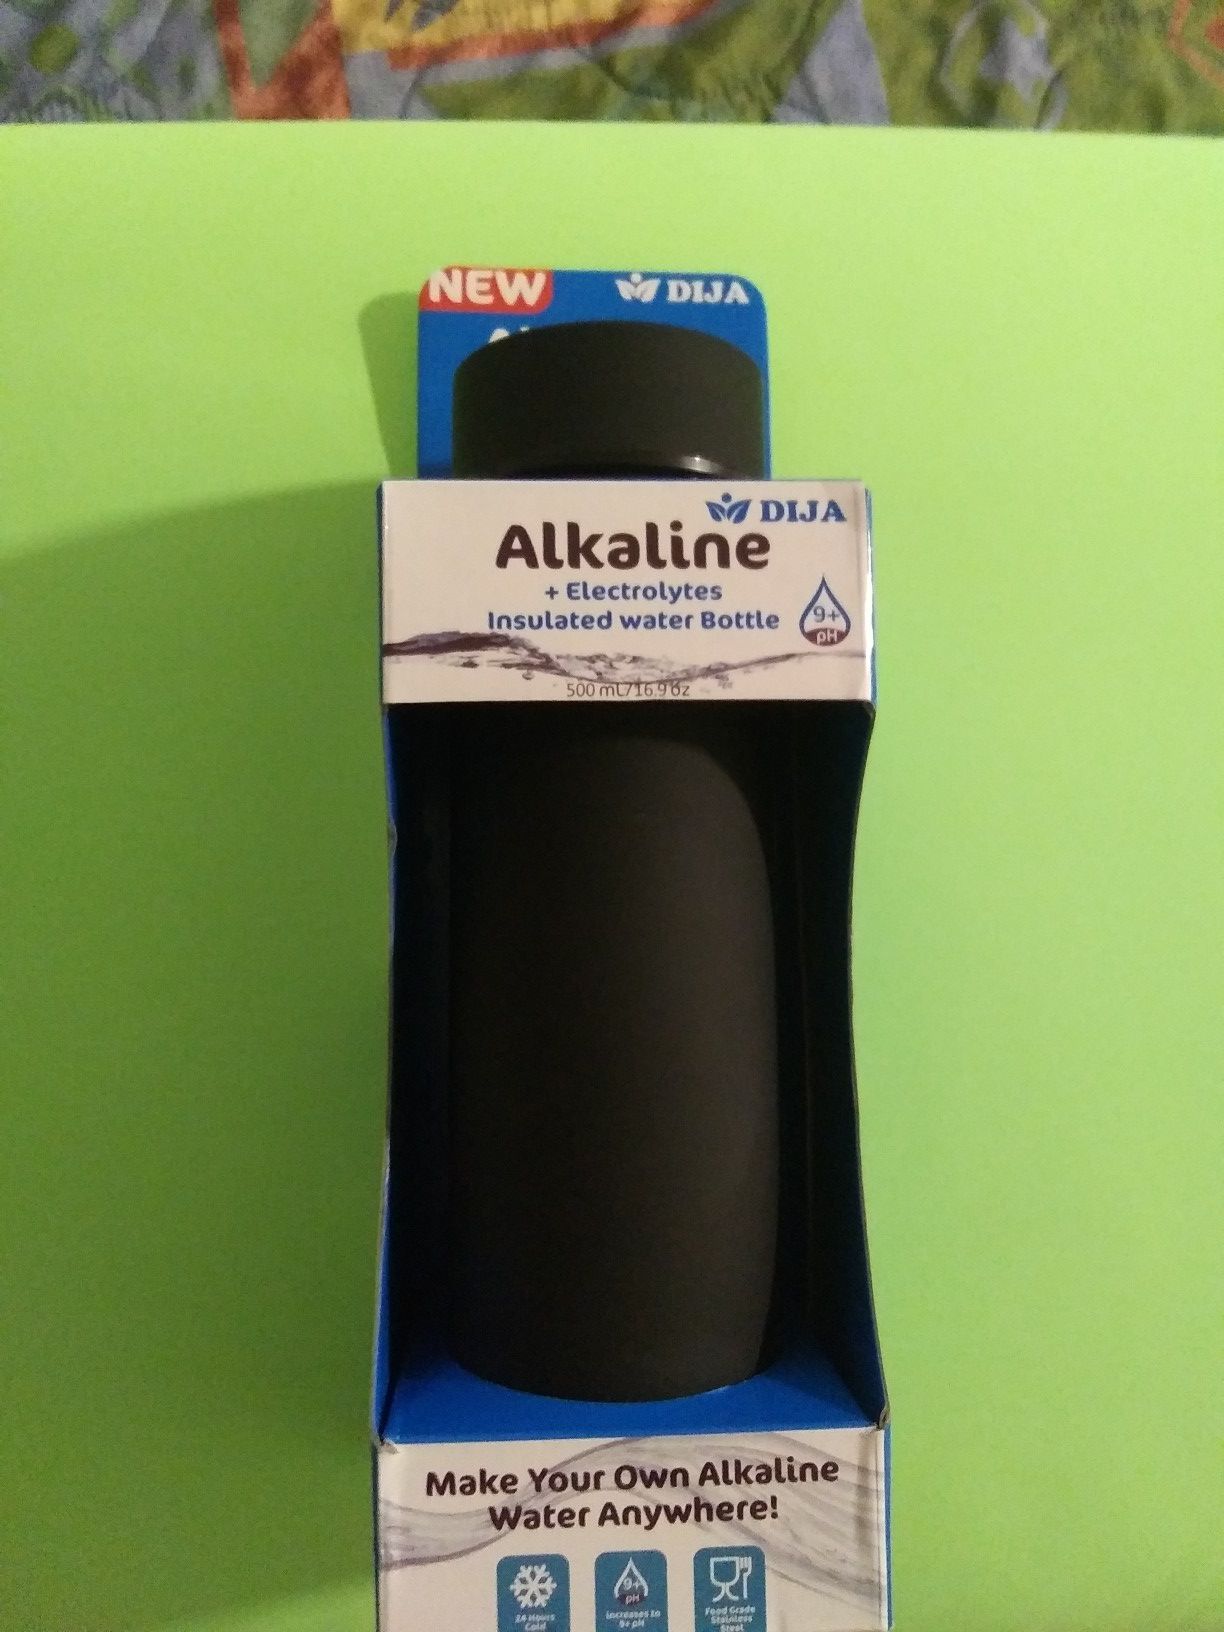 Alkaline + electrolytes insulated water bottle